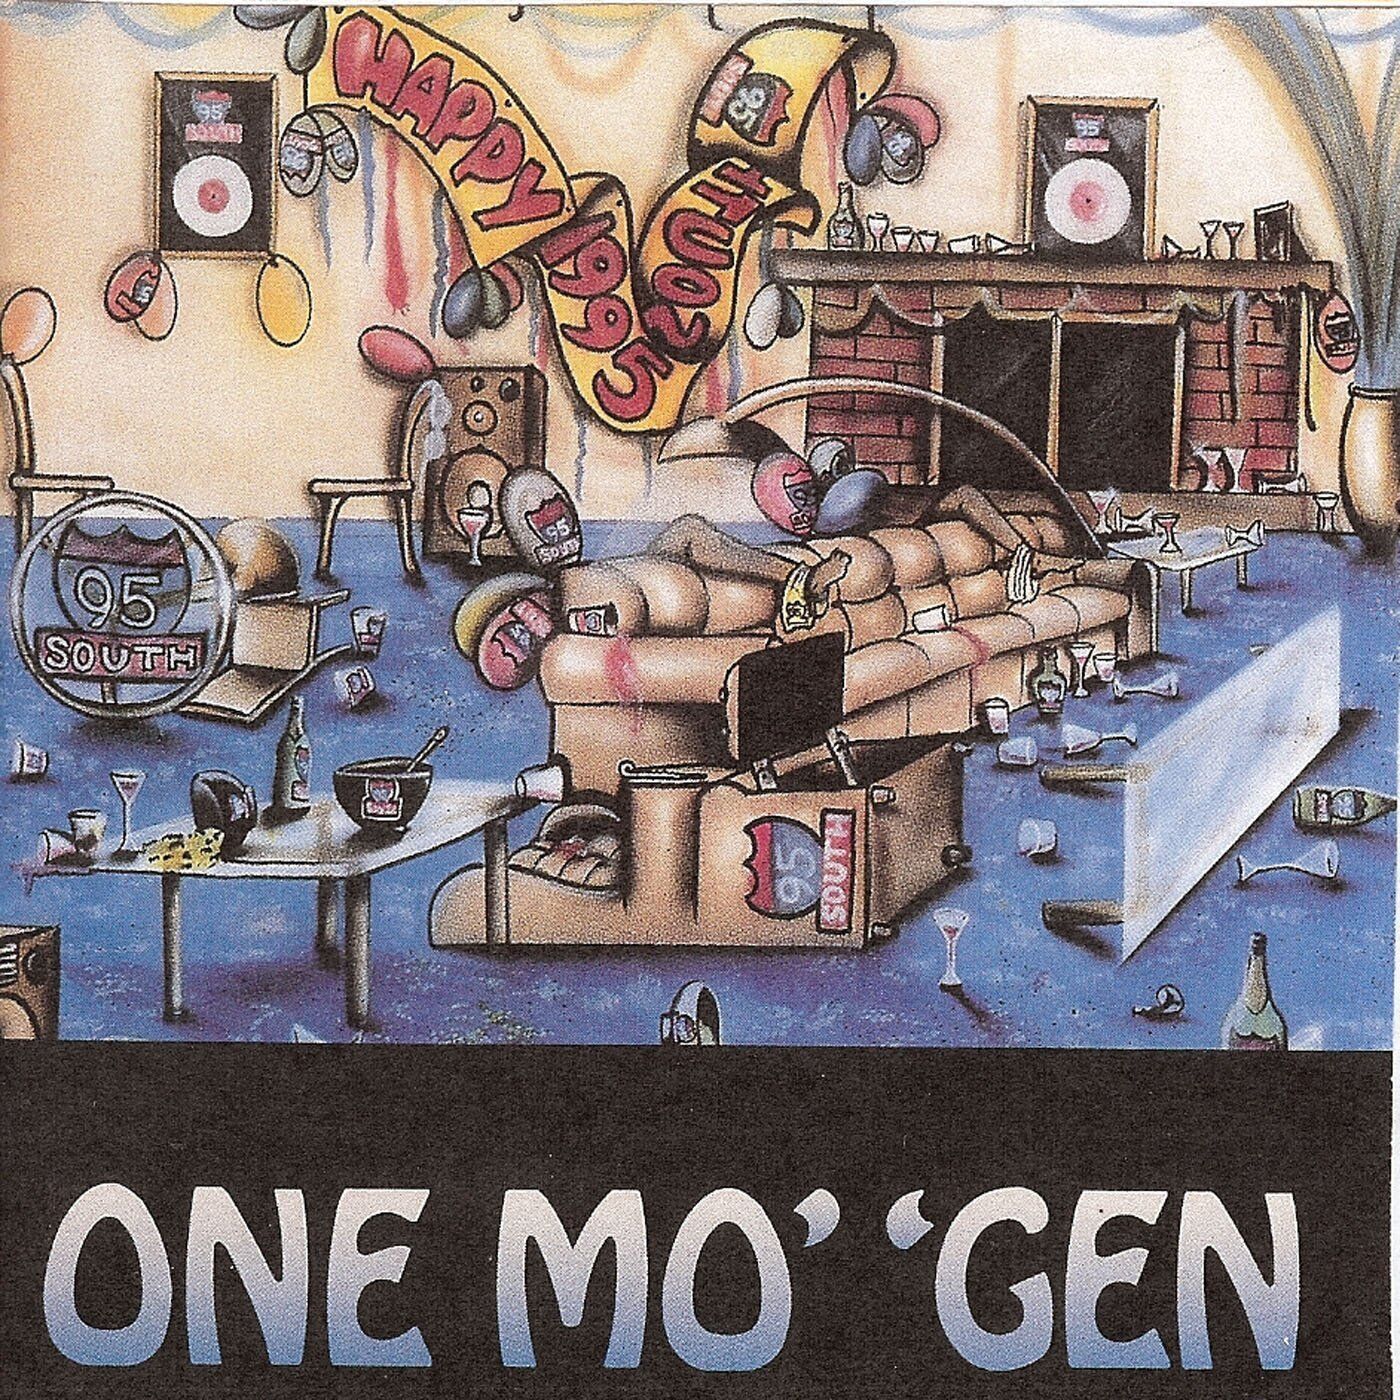 95 SOUTH One Mo\' Gen (Vinyl)